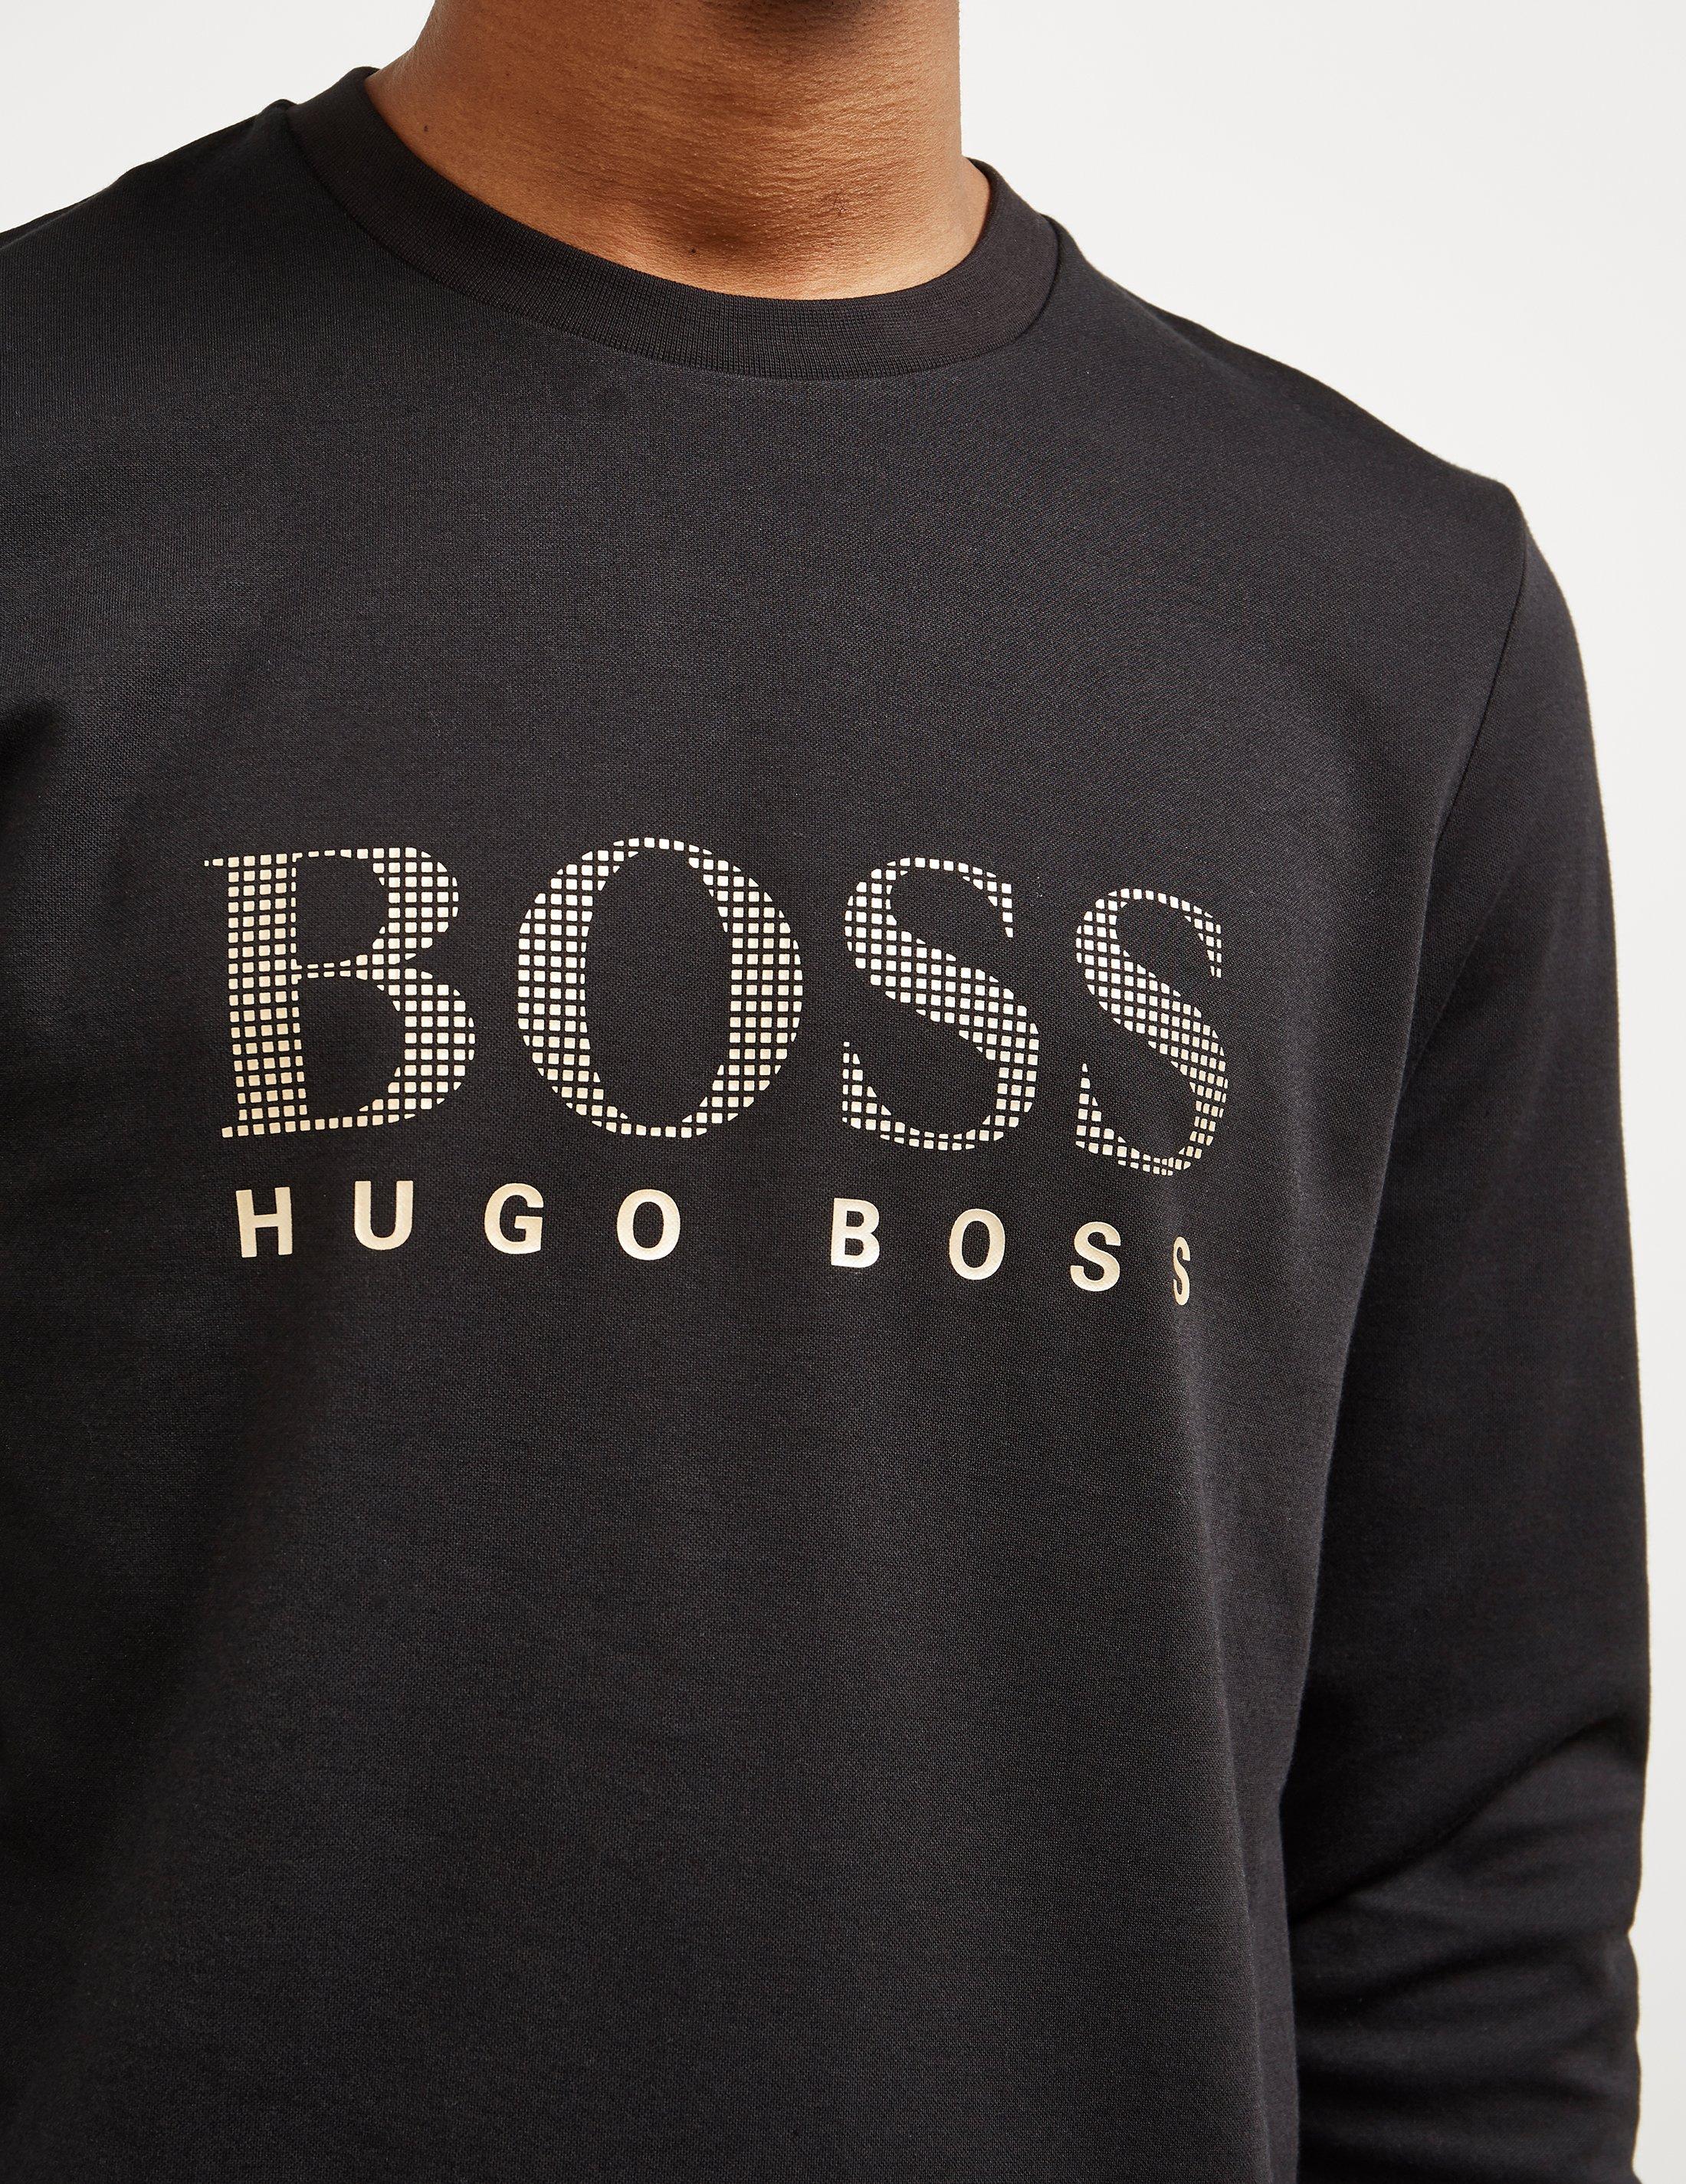 boss logo sweatshirt